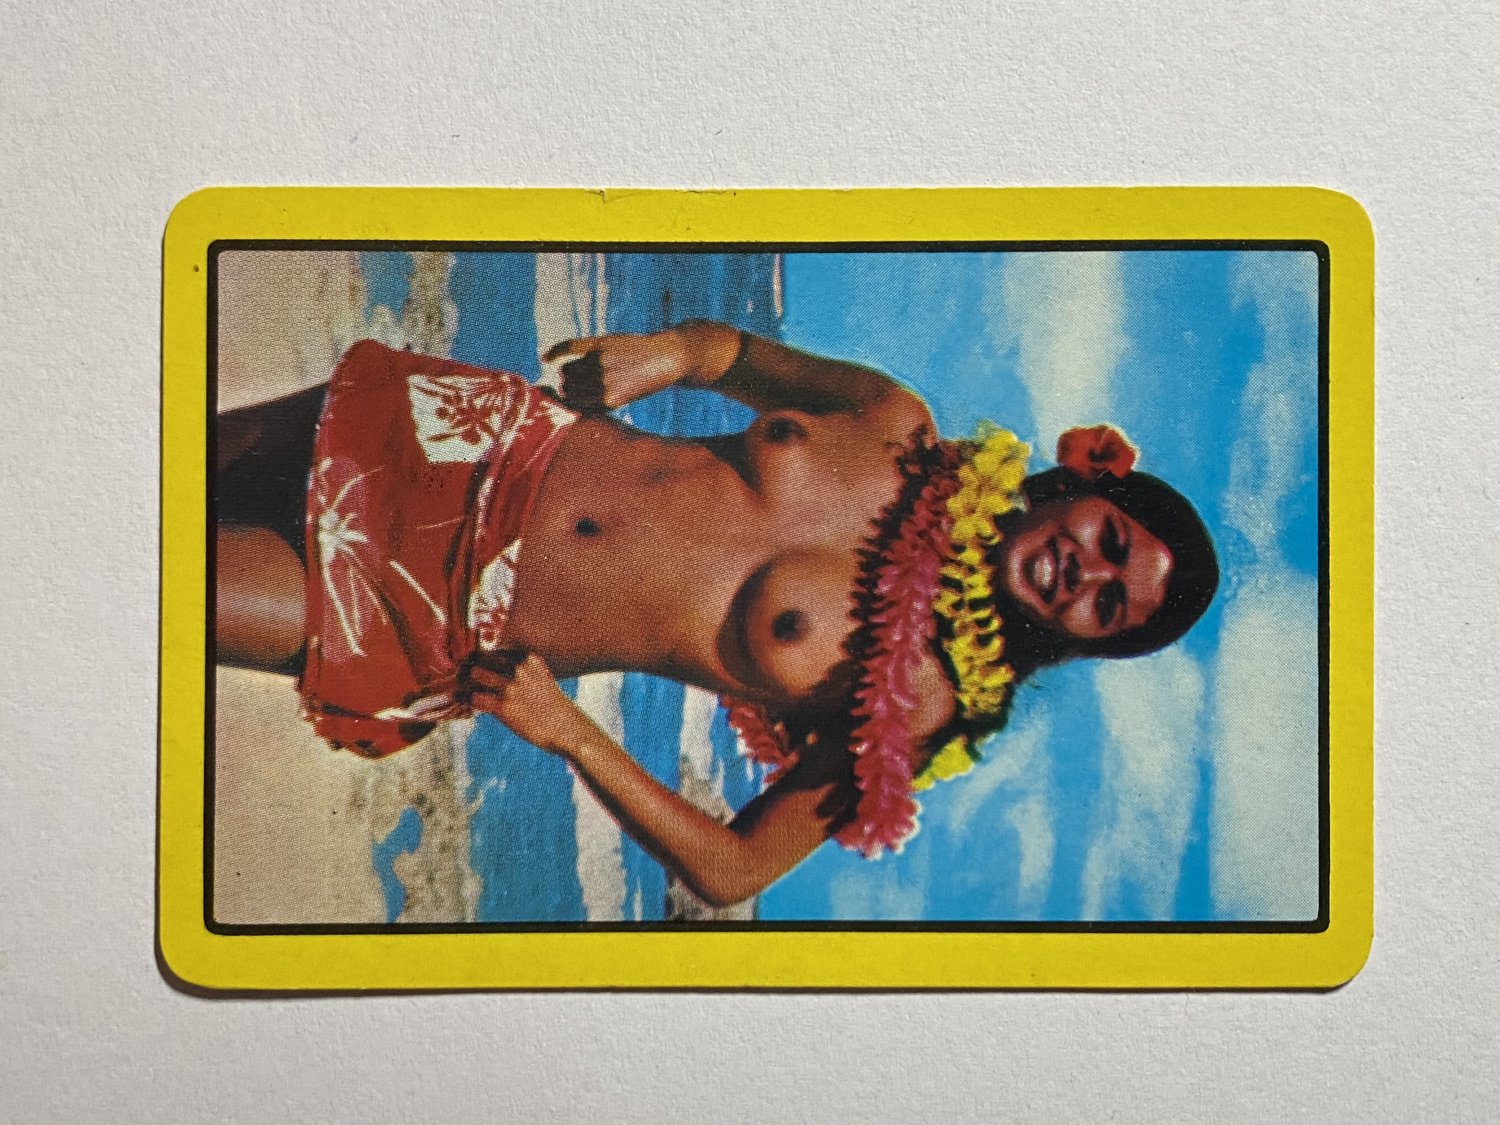 SINGLE 1 PLAYING SWAP CARD - HAWAIIN GLAMOUR GIRL (TT517)